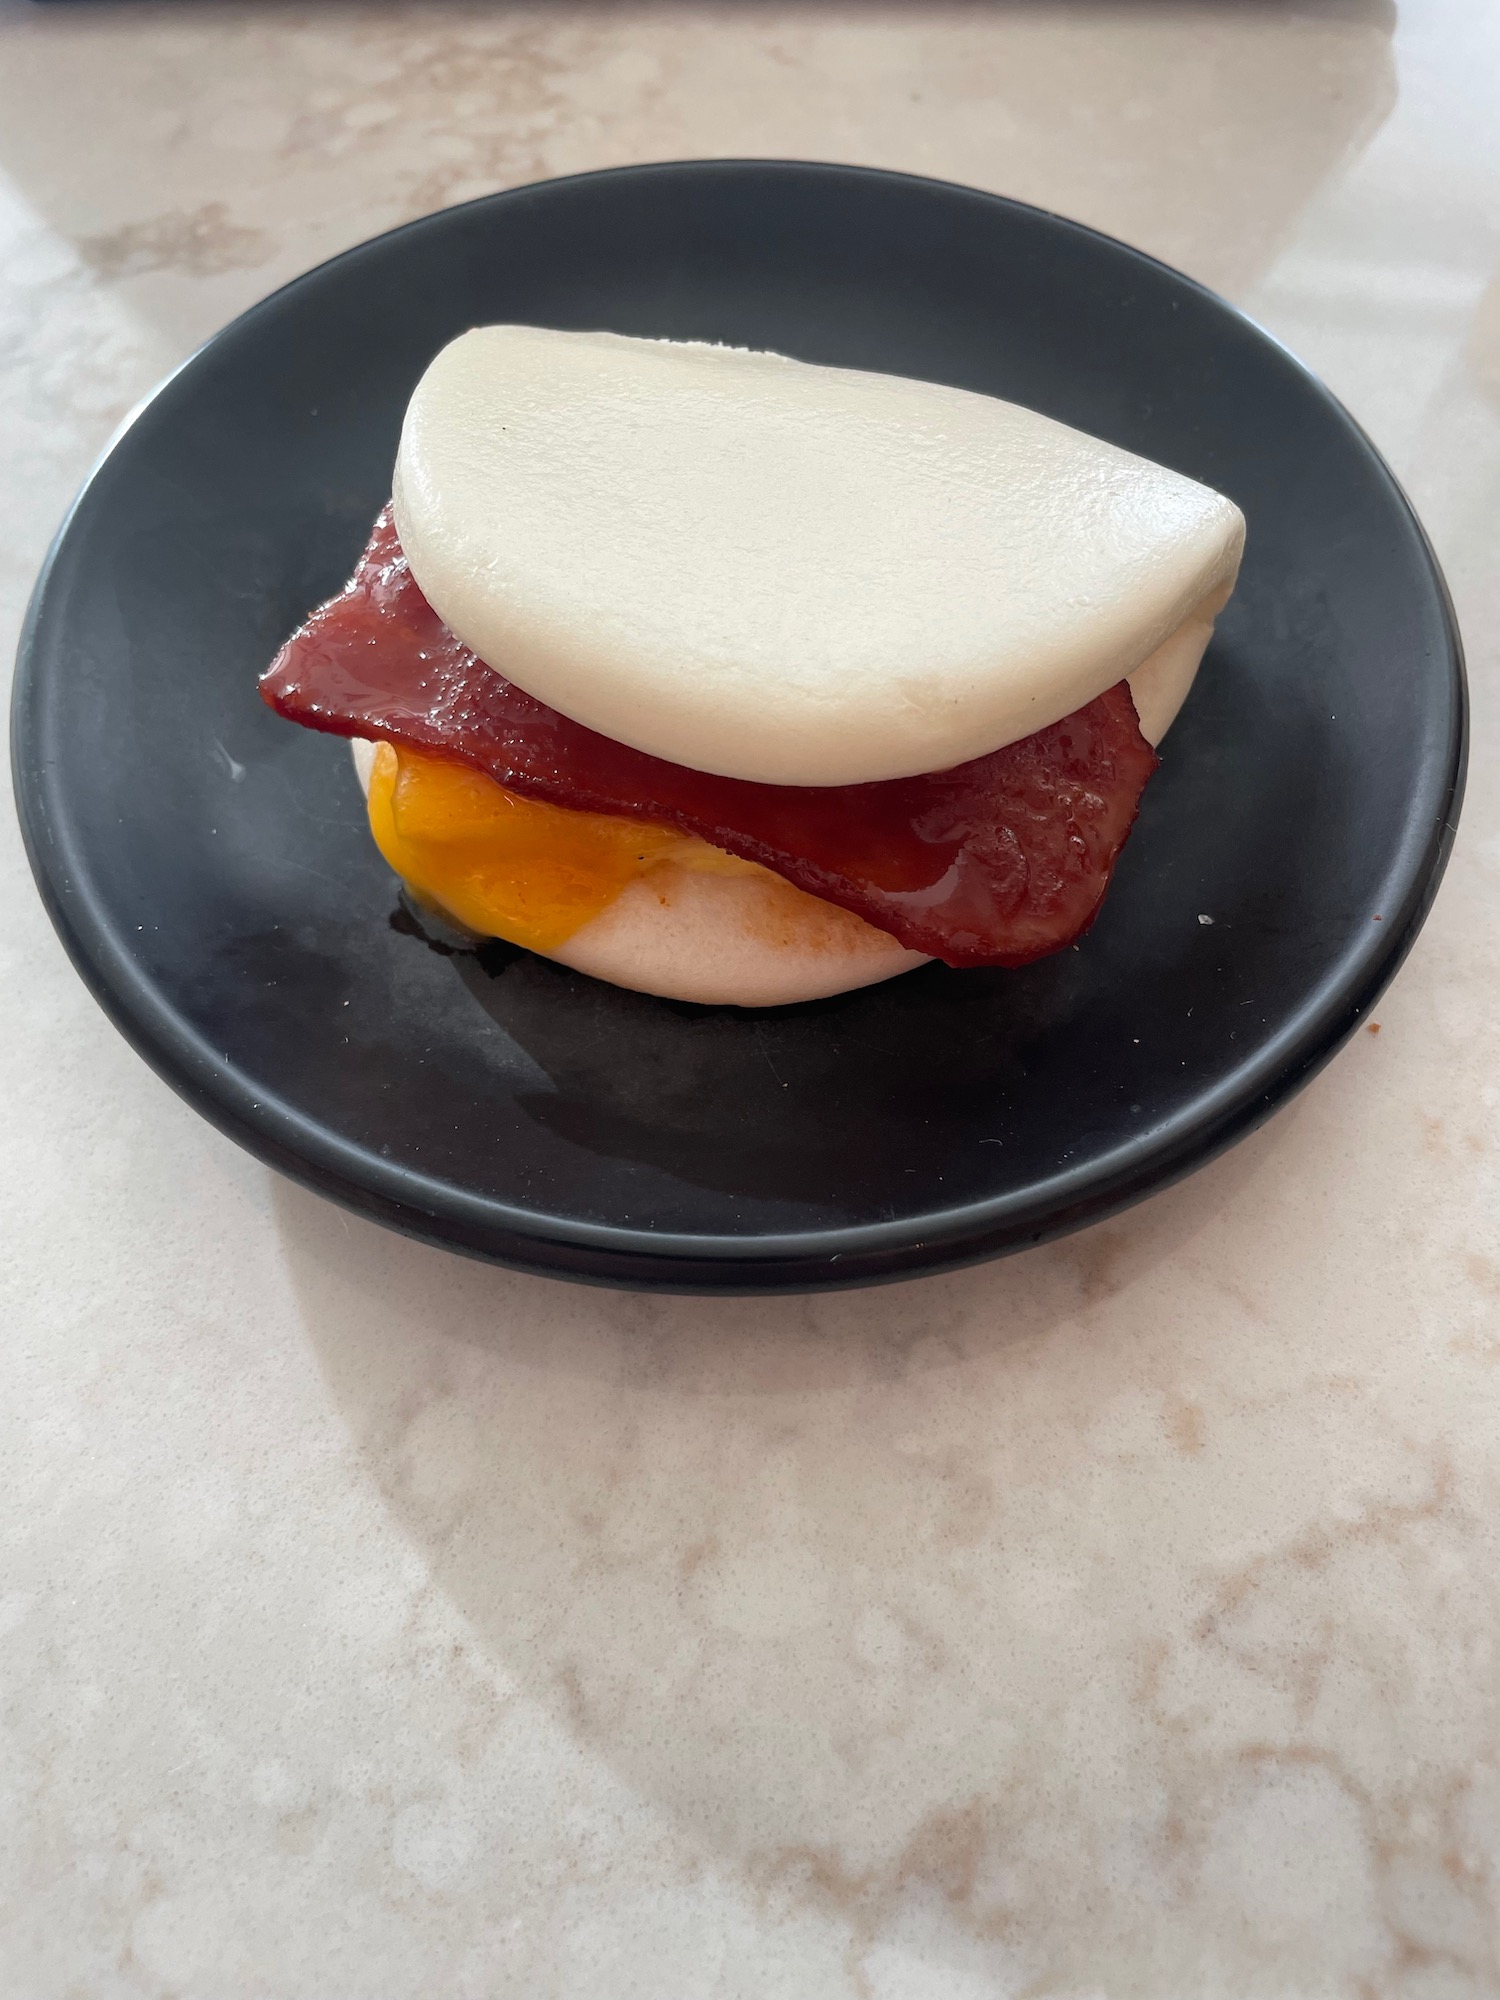 a sandwich on a black plate